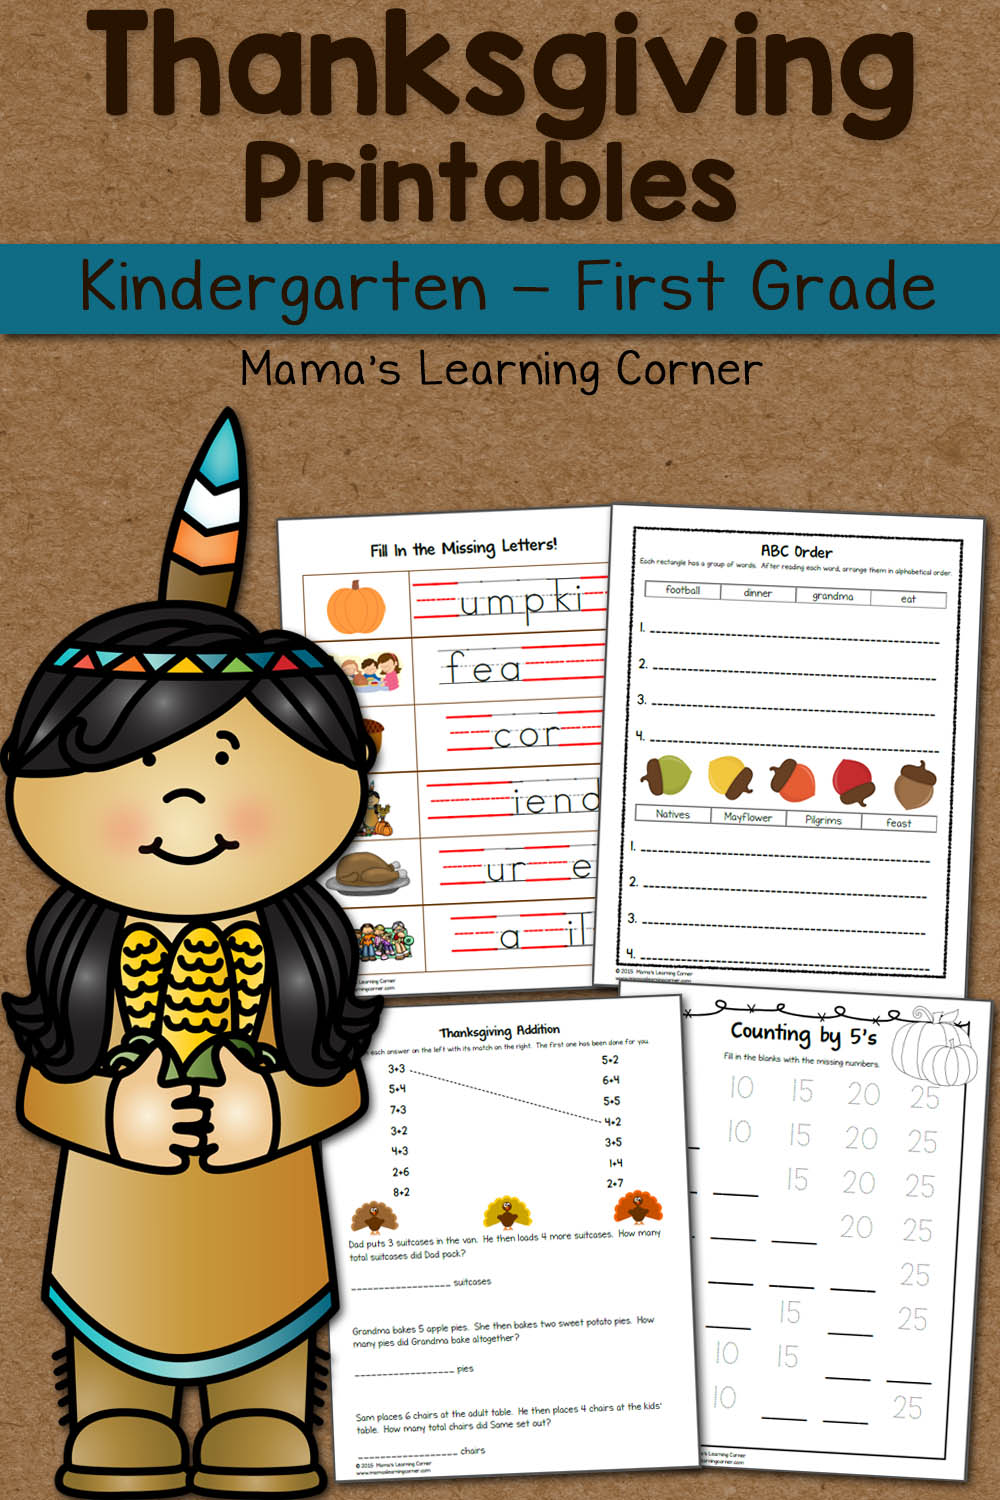 Thanksgiving Worksheet Packet for Kindergarten and First Grade - Mamas